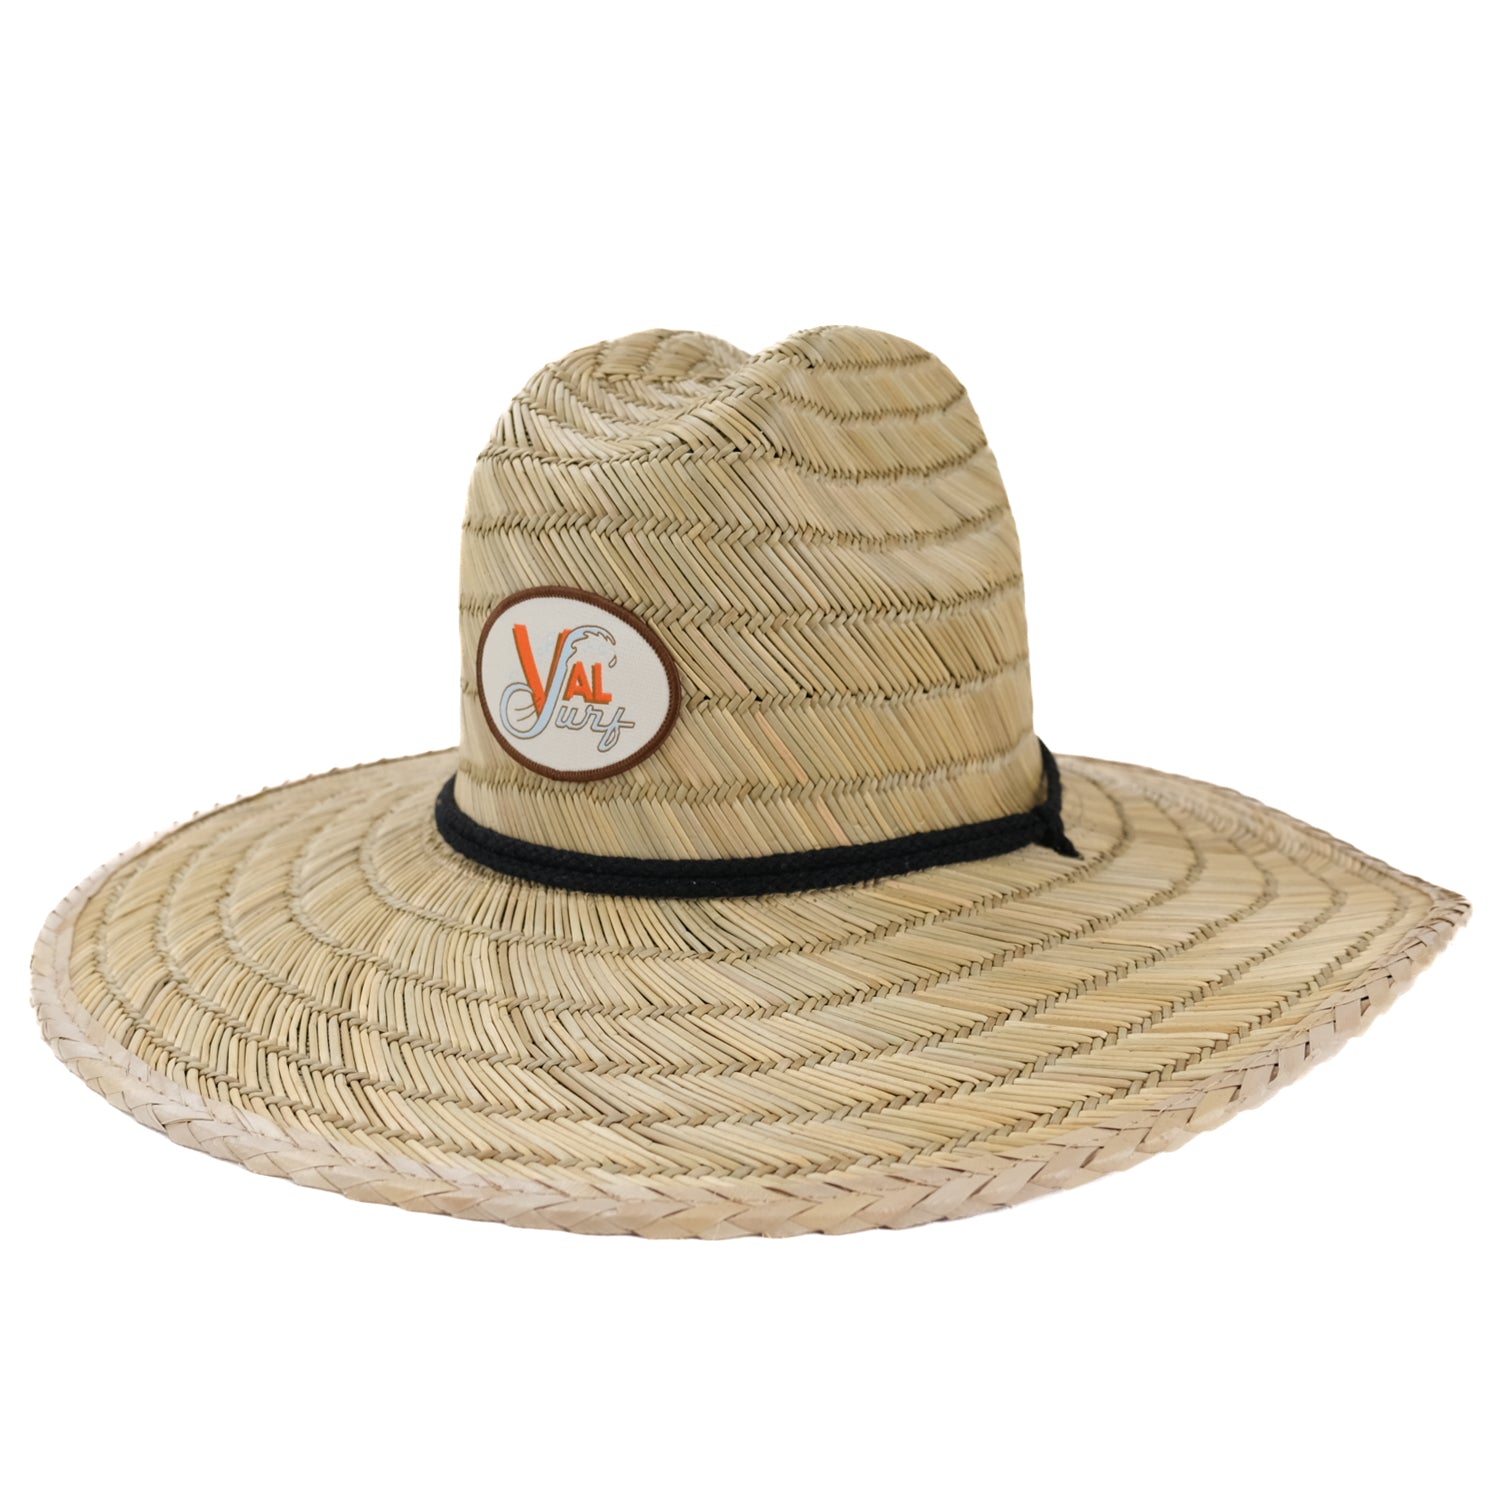 Val Surf Costa LG Hat - Natural